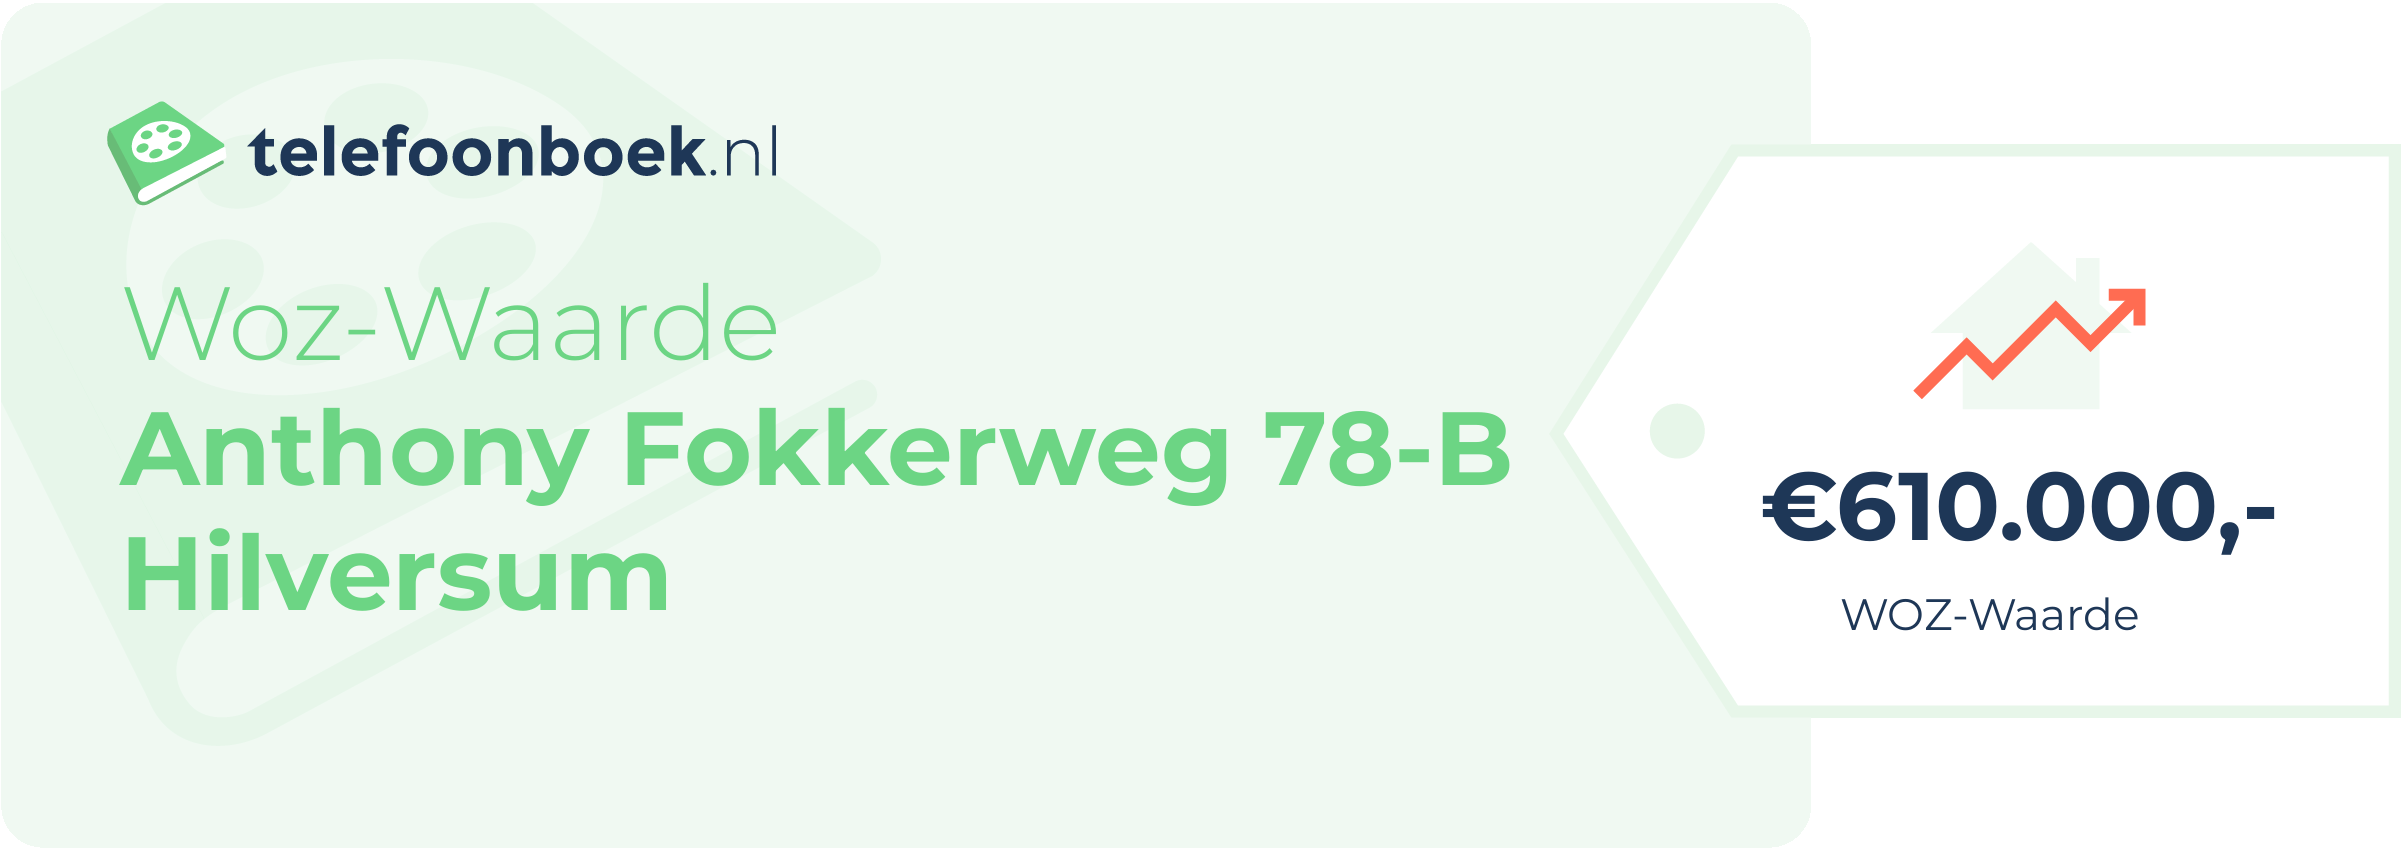 WOZ-waarde Anthony Fokkerweg 78-B Hilversum